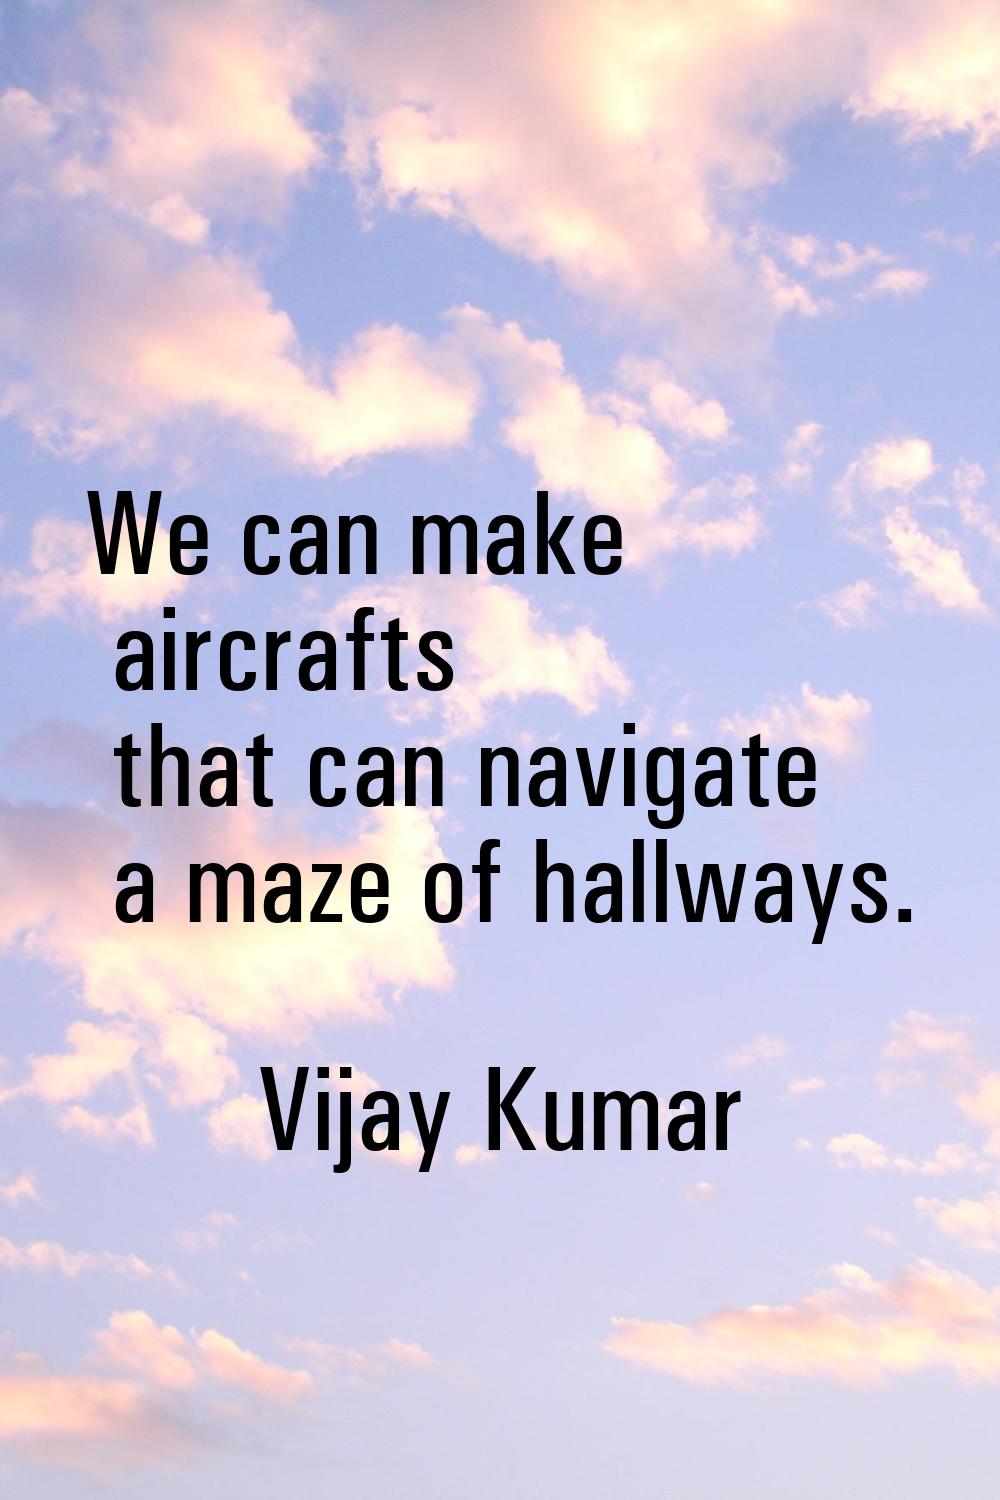 We can make aircrafts that can navigate a maze of hallways.